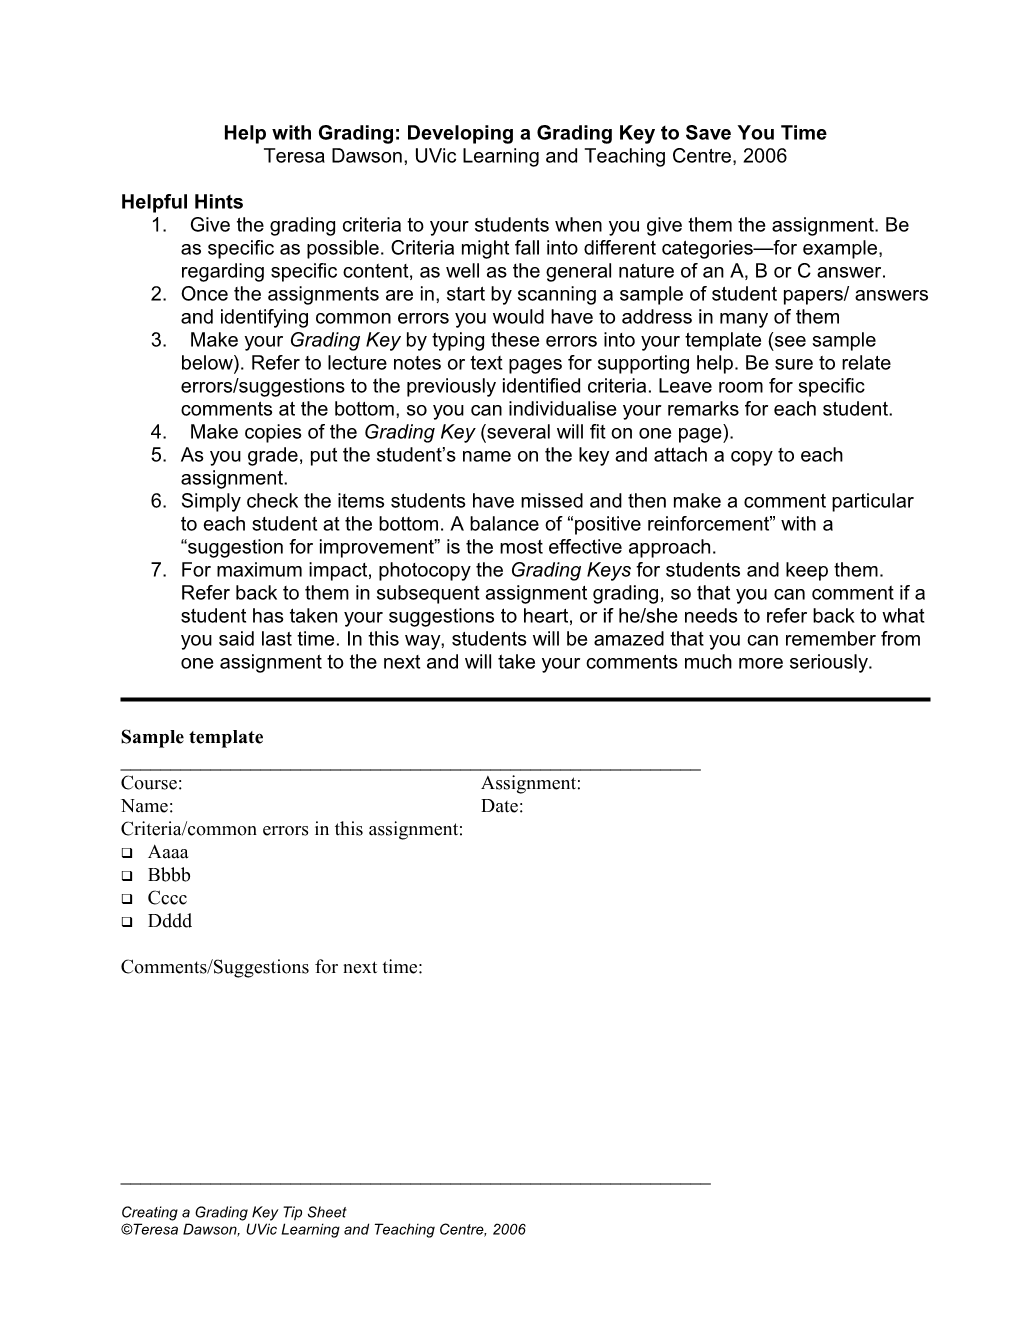 Creating a Grading Key Tip Sheet